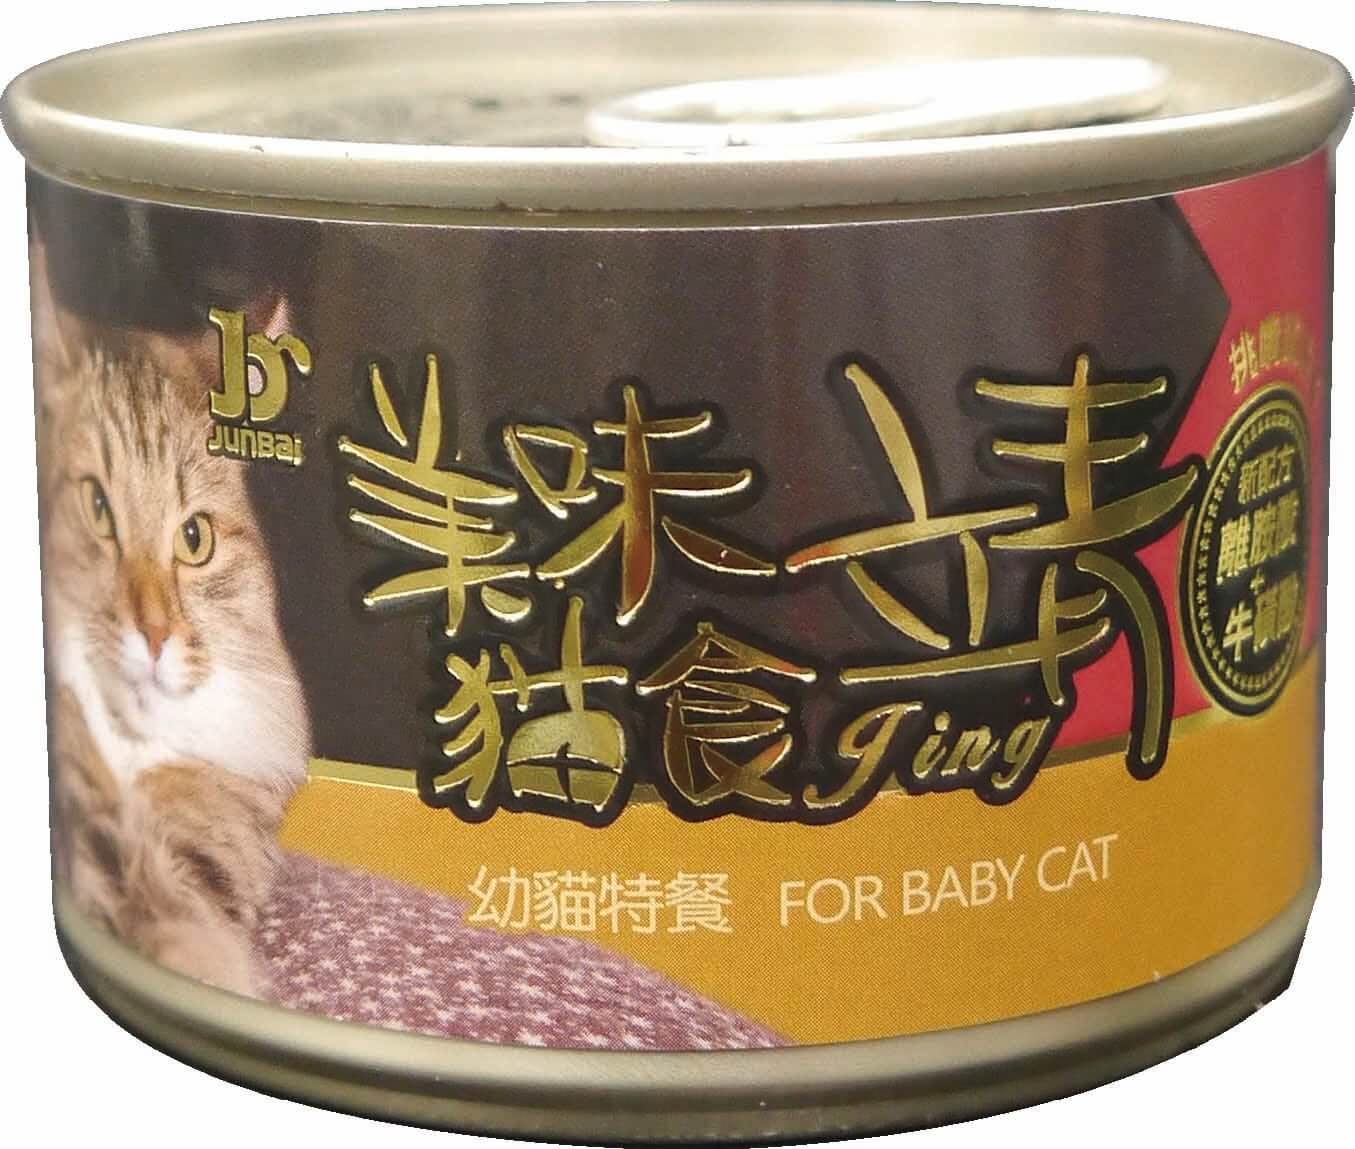 靖特級貓罐160G-幼貓特餐
Jing cat can-for baby cat